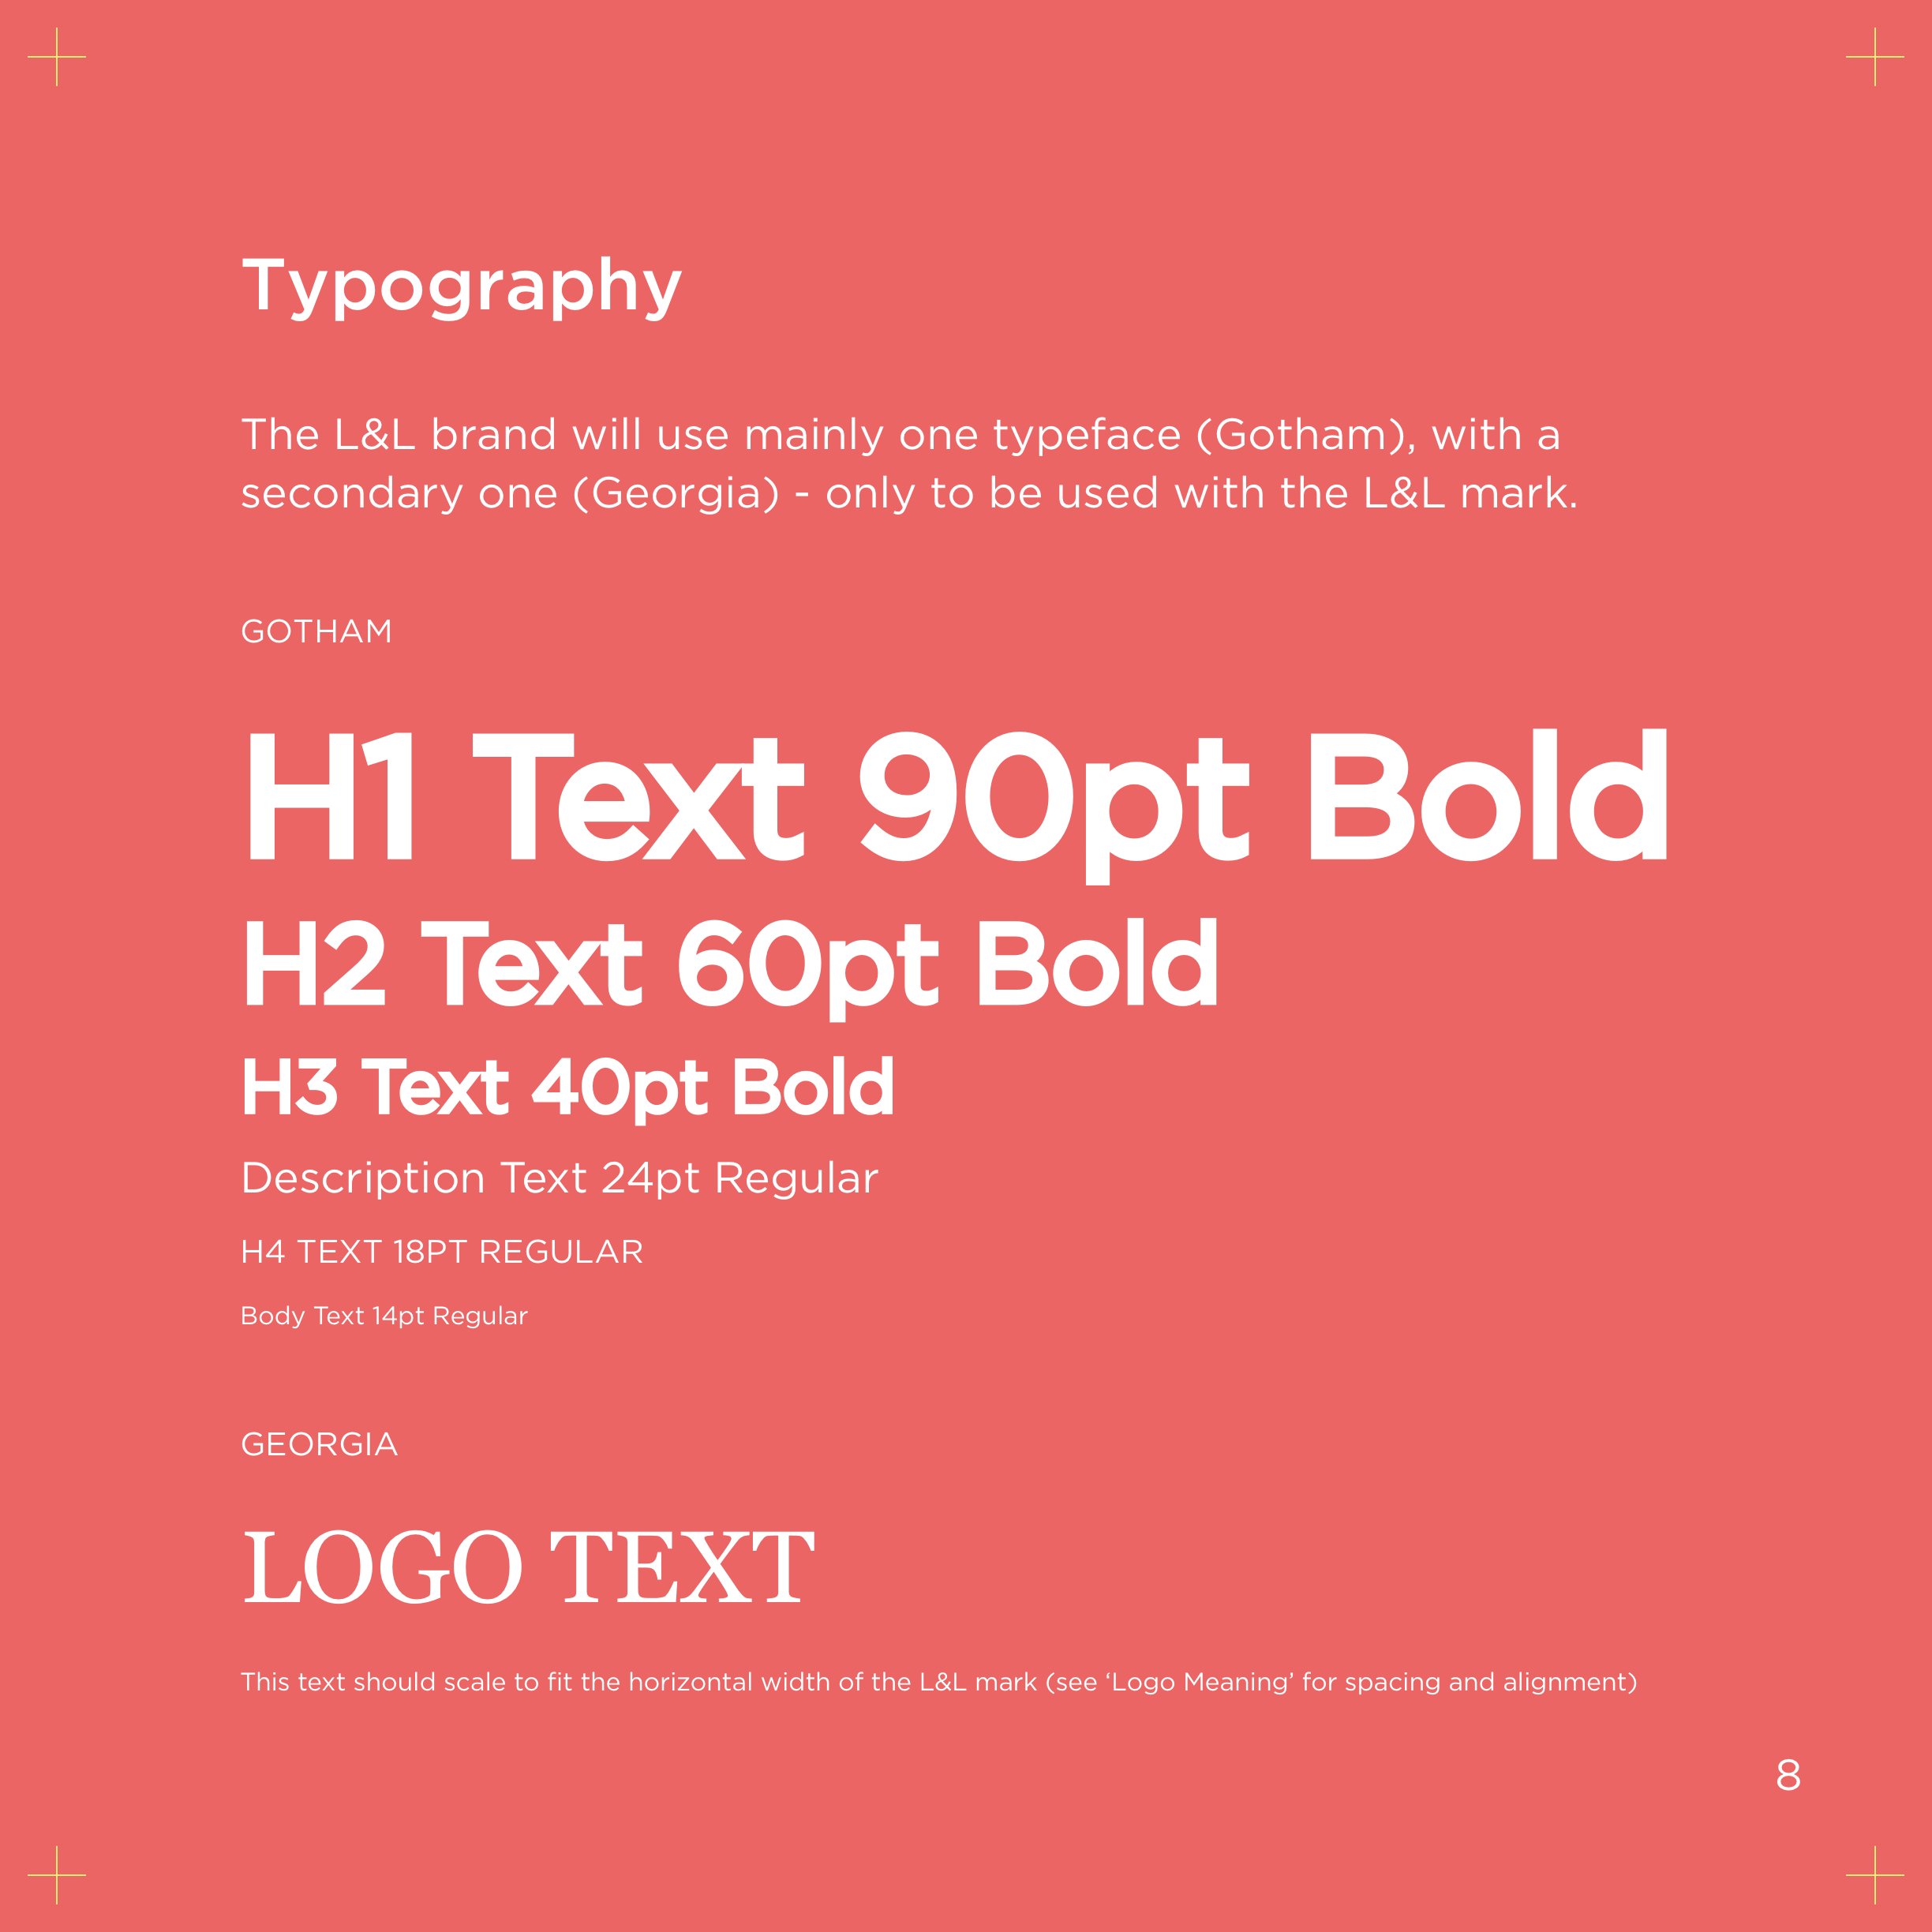 08_L&L_BrandBook_Typography Copy.jpg